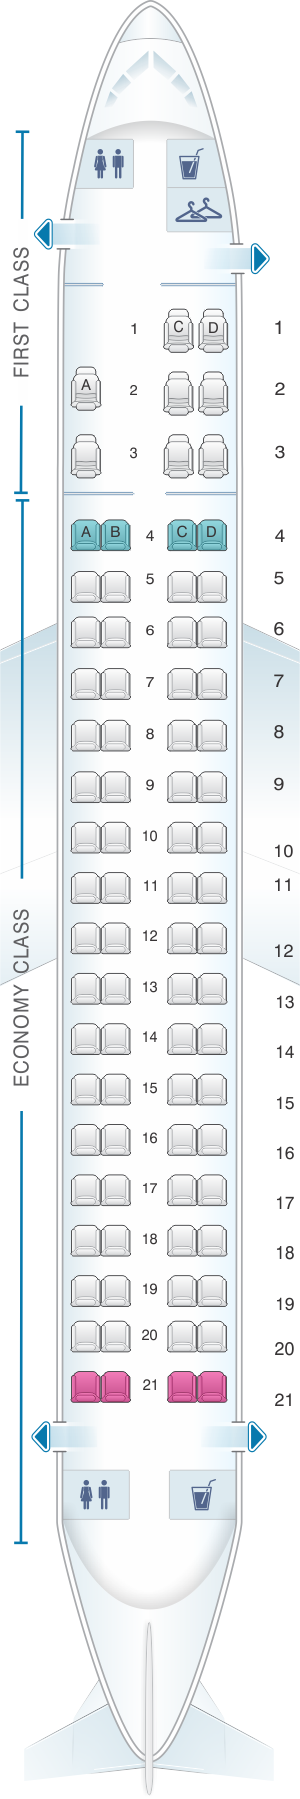 Seat map for American Airlines Embraer ERJ 175 V2